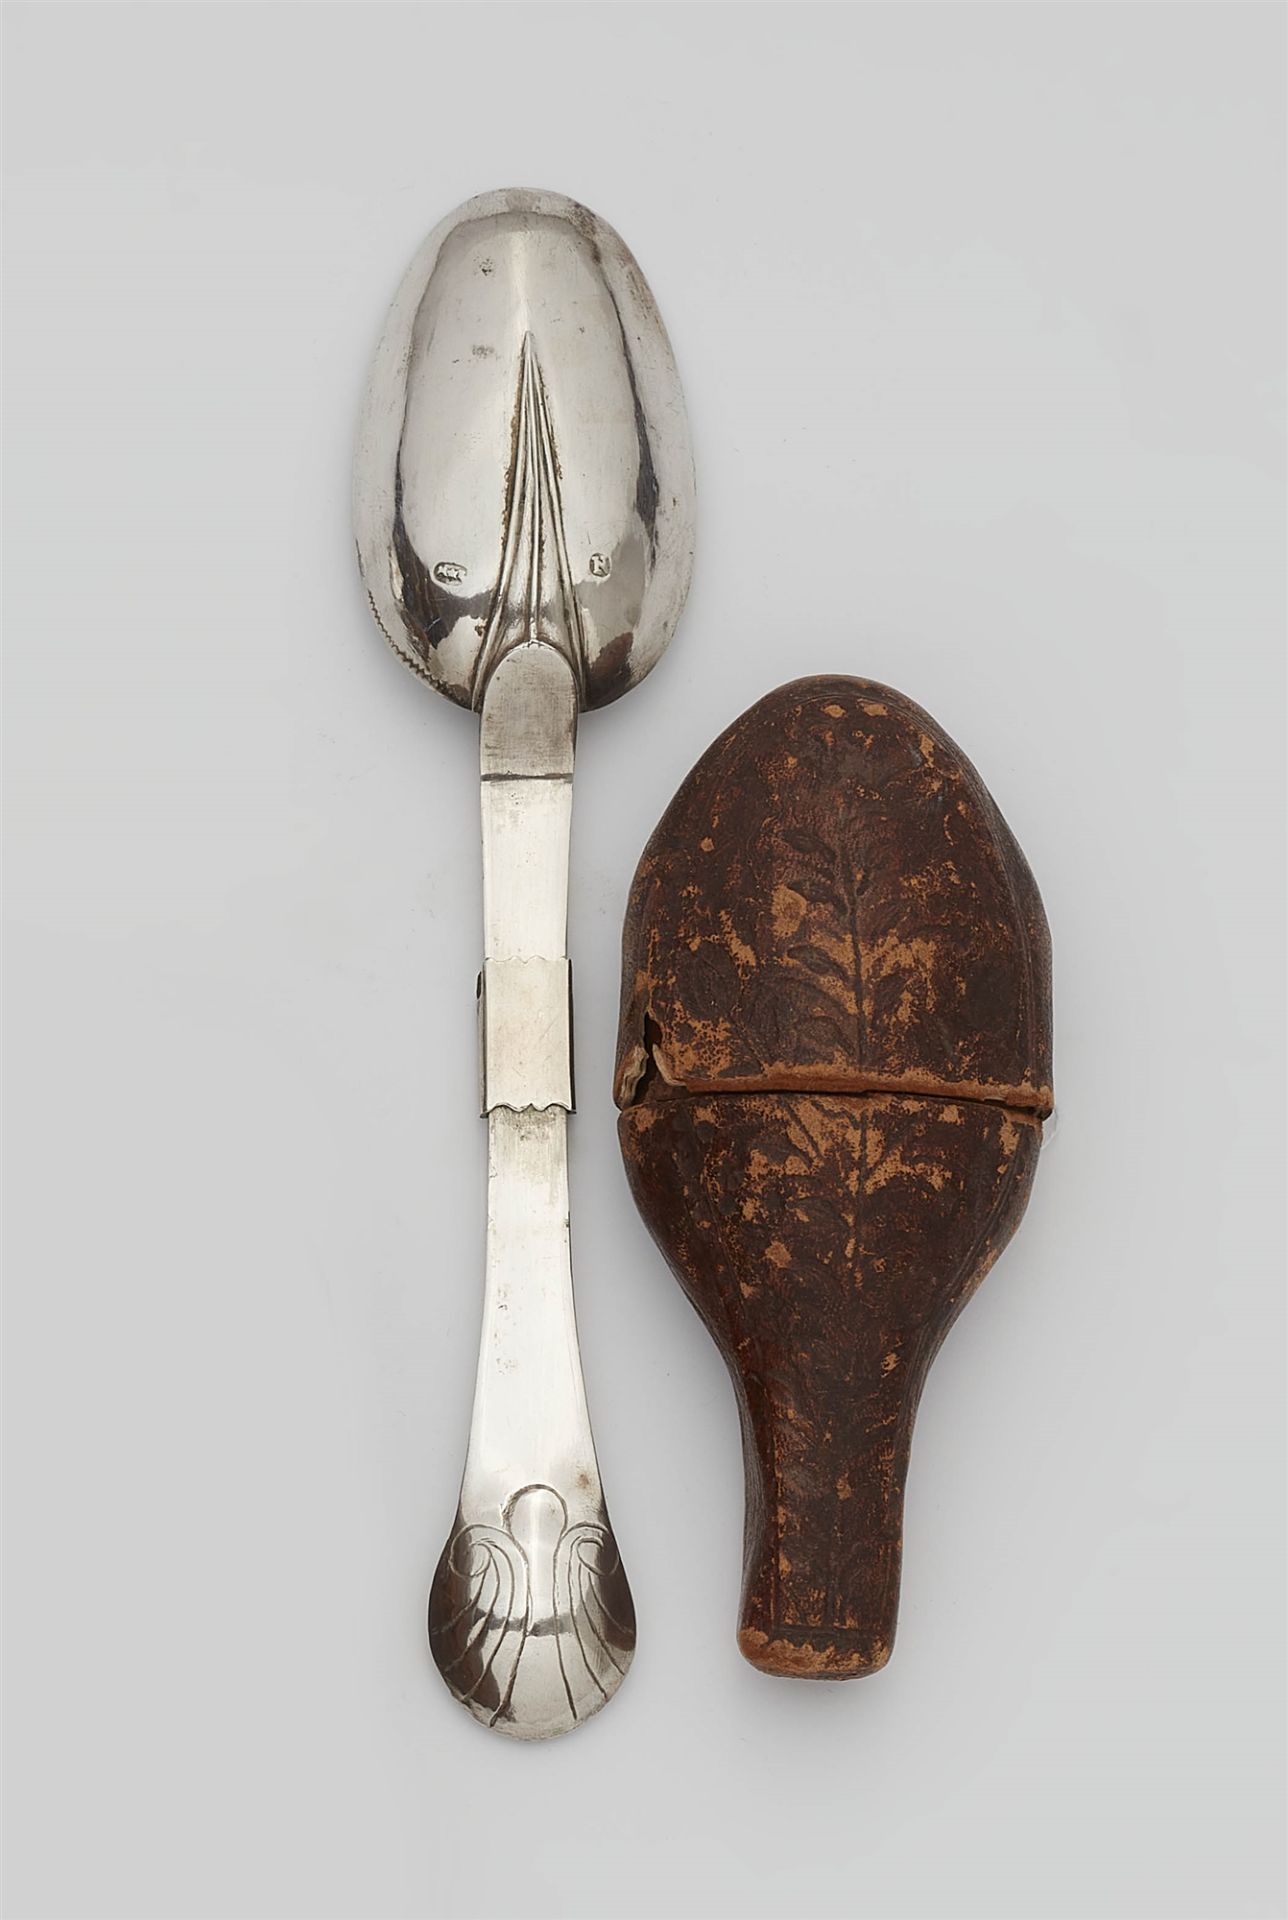 A Nuremberg silver folding spoon in a case